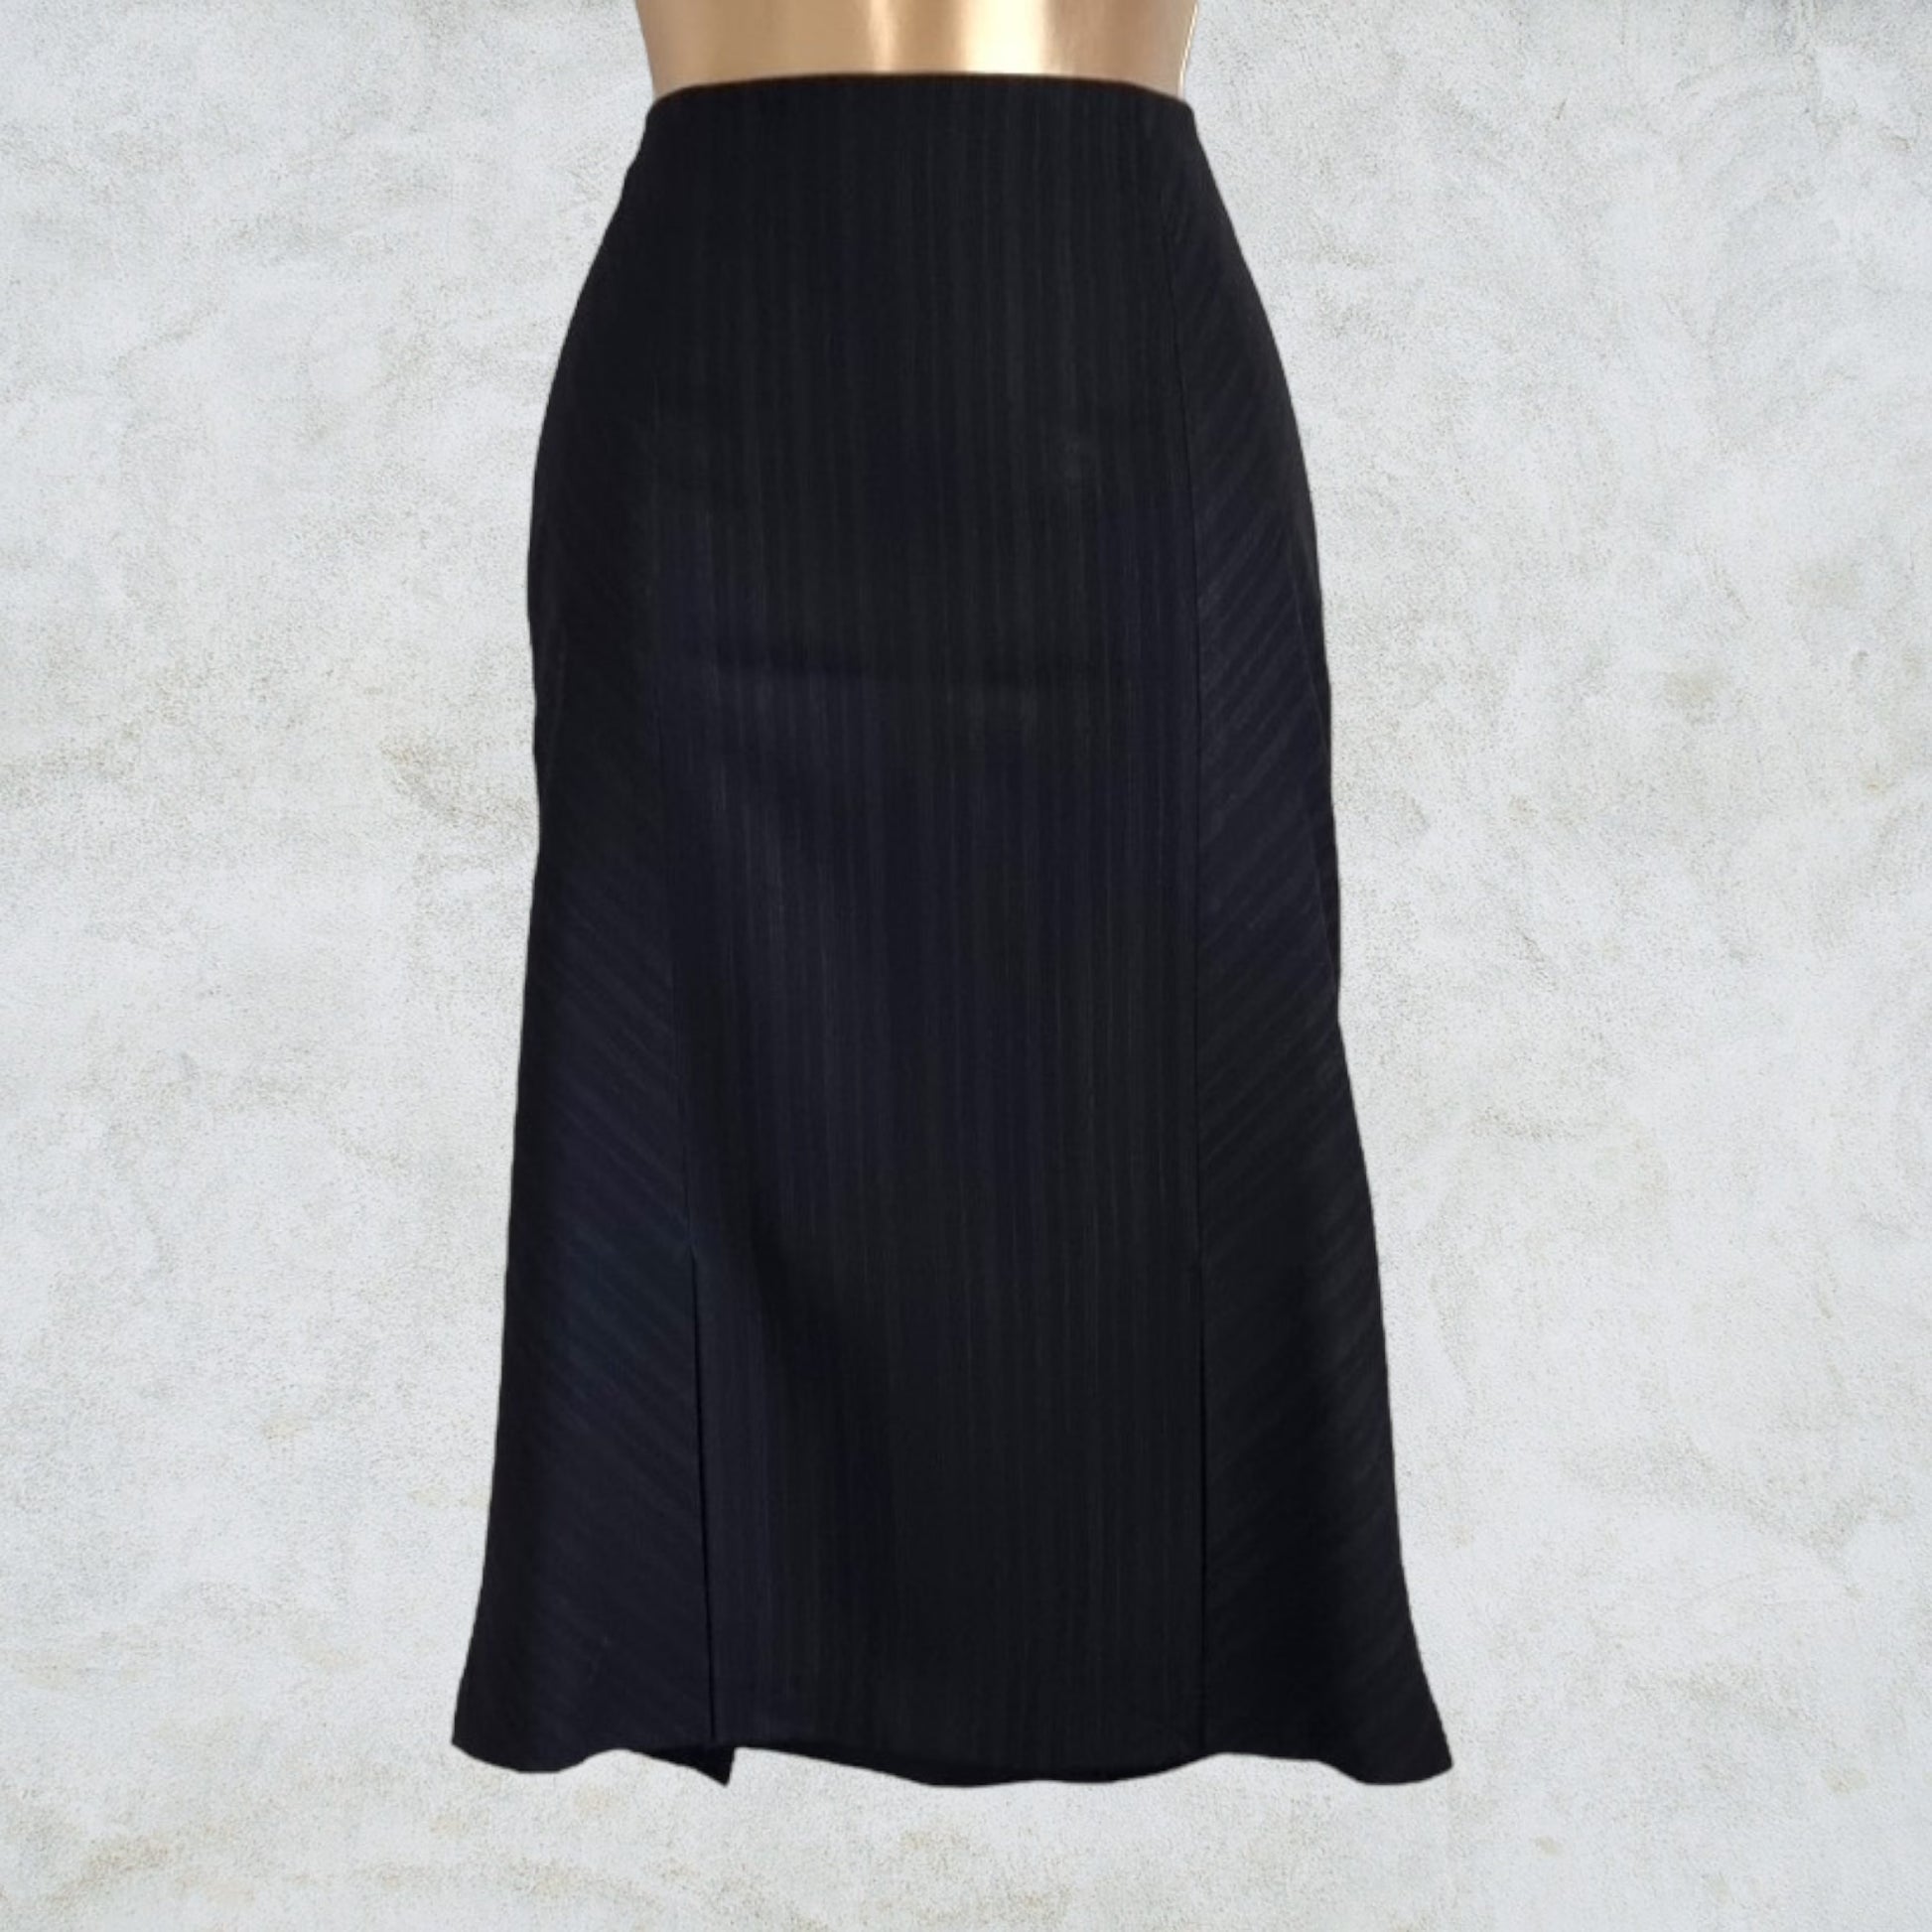 Zapa Black & Brown Herrigbone Design Skirt UK 12 US 8 EU 40 BNWT RRP £148 Timeless Fashions